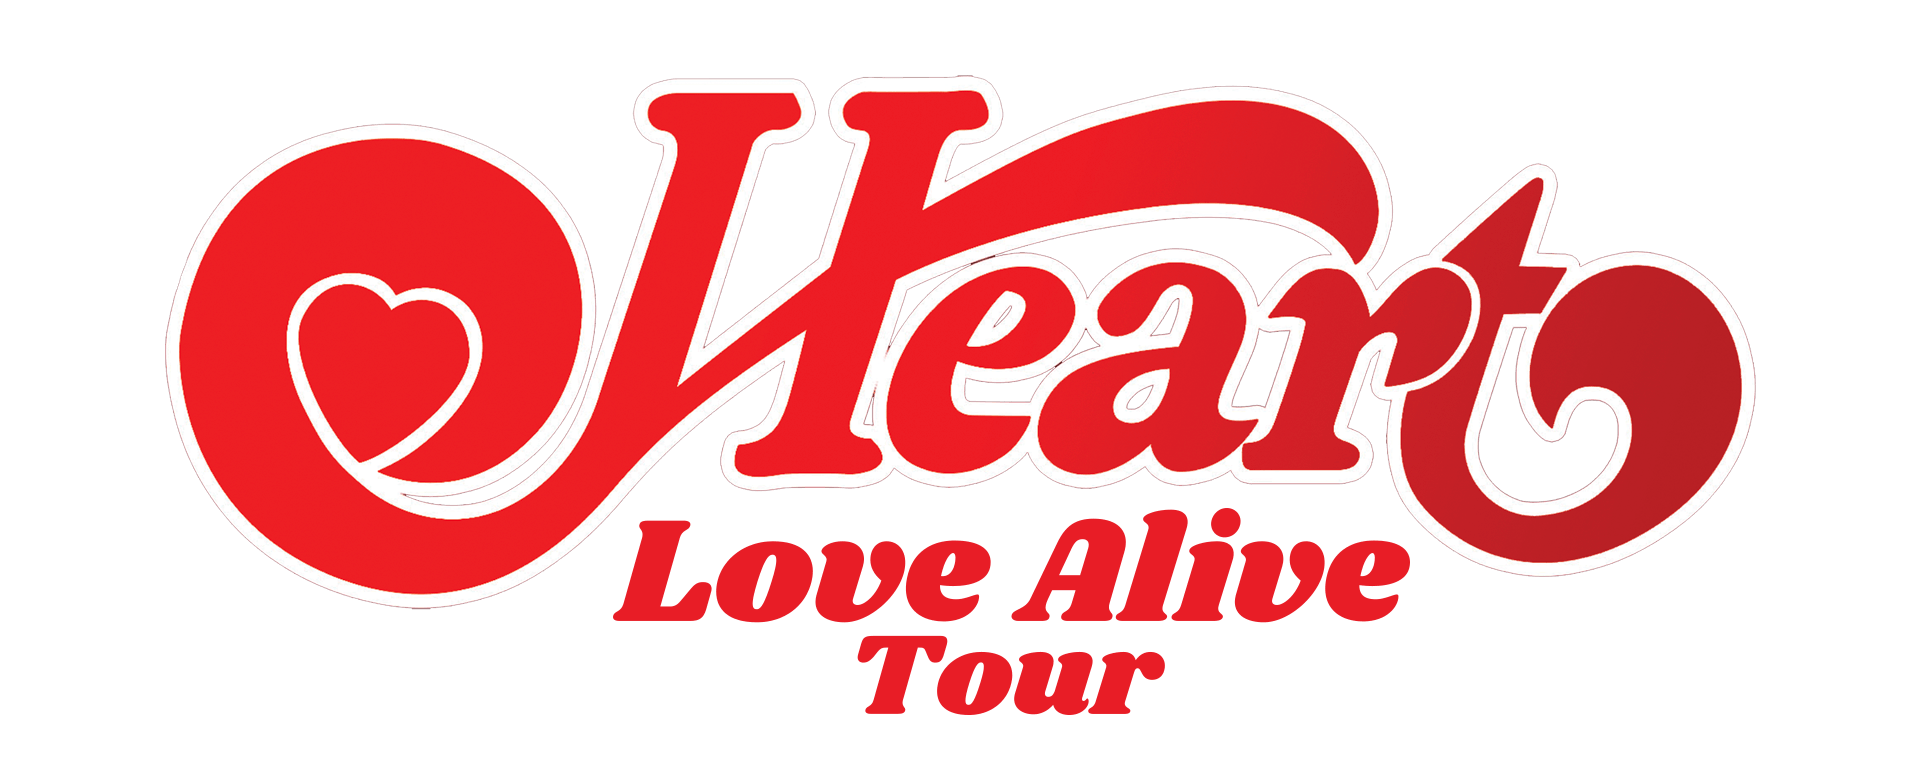 Heart Band Logo - Heart - reveal